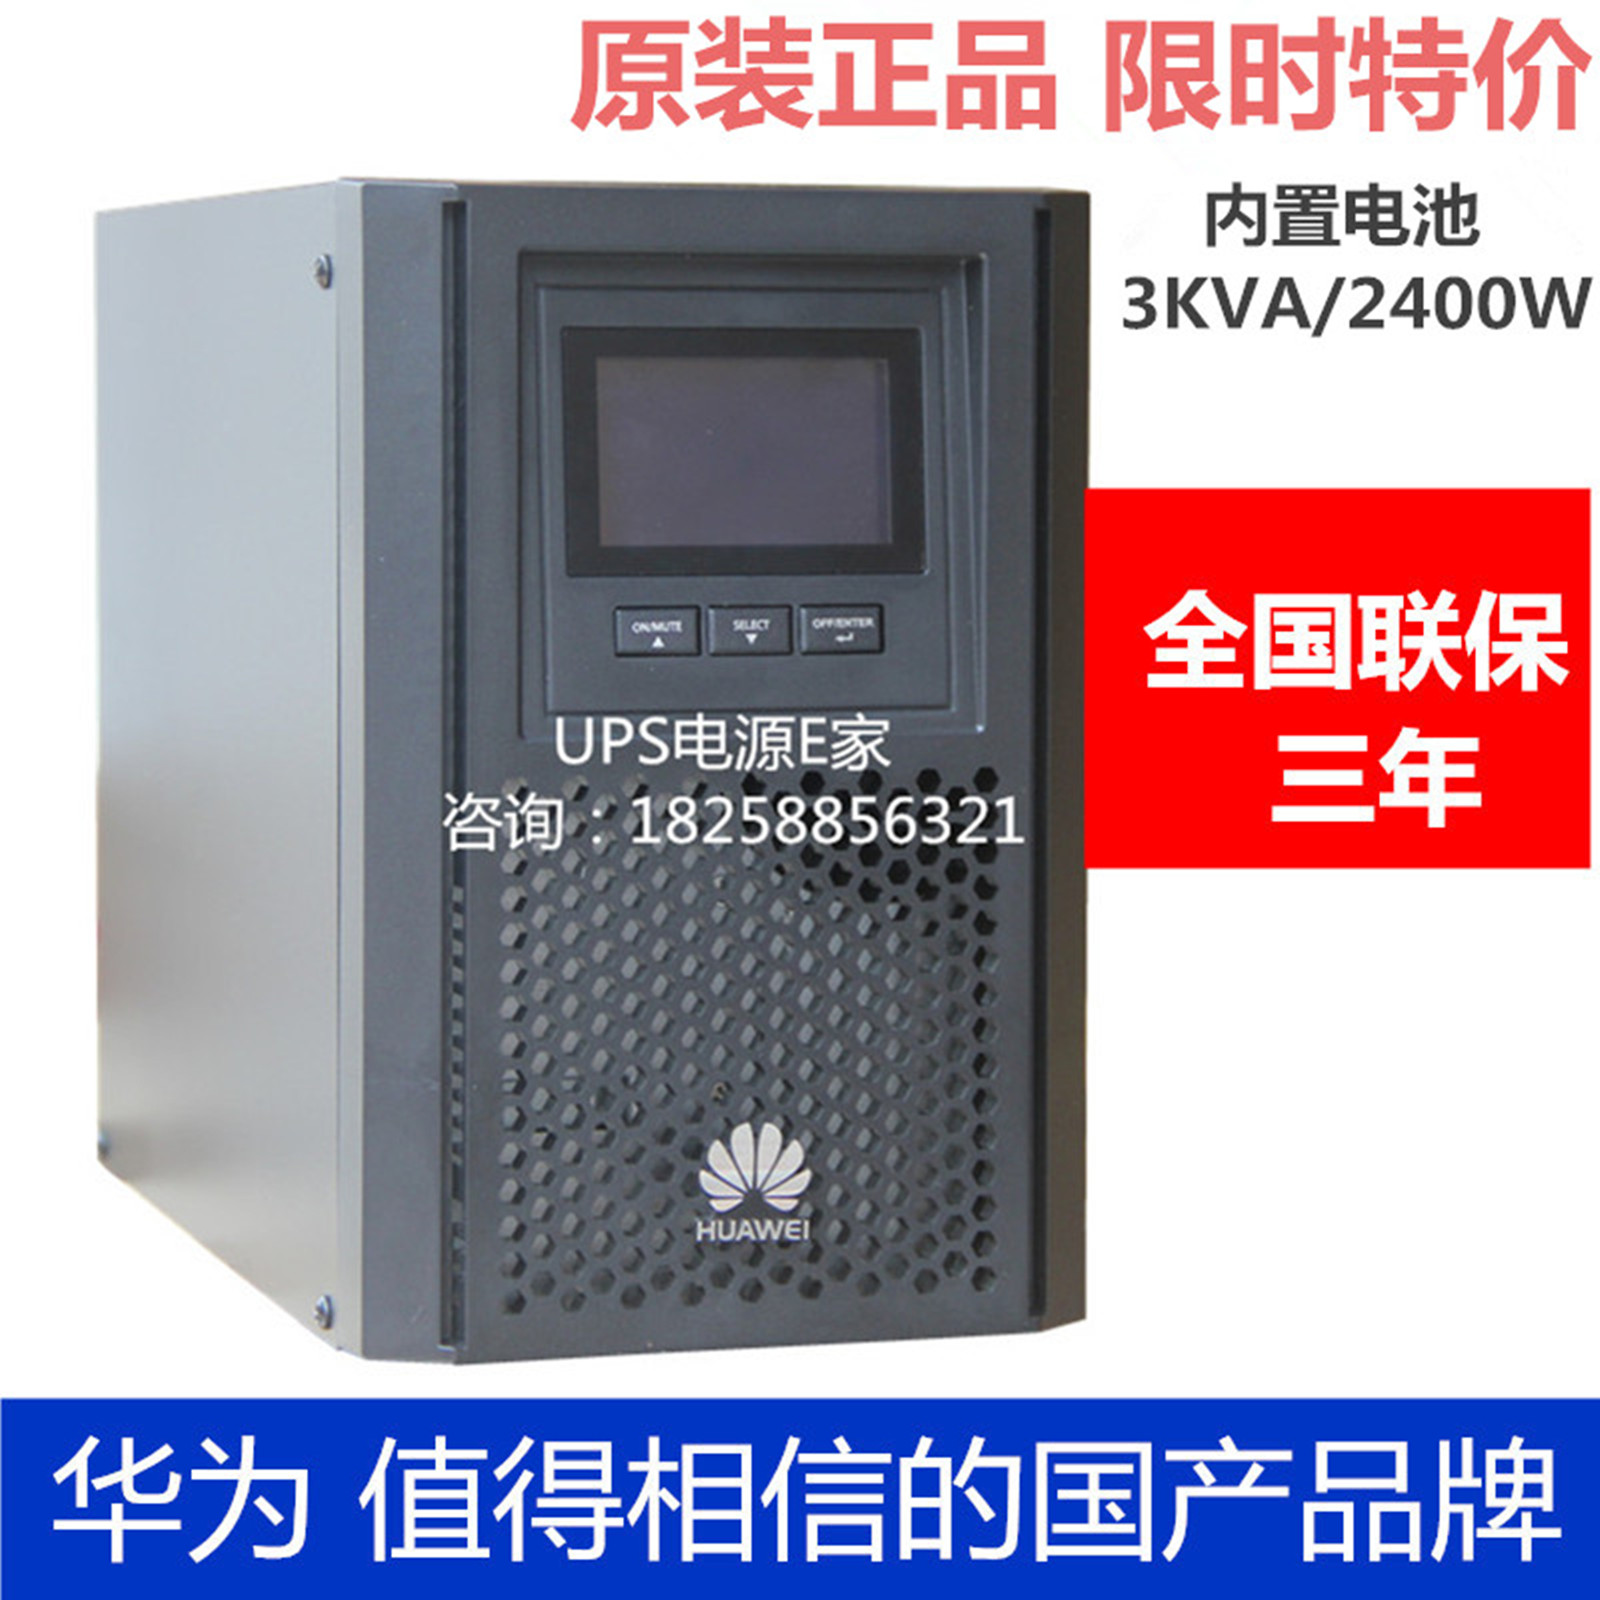 [$771.20] Huawei UPS Uninterruptible Power Supply 2000-A-3KTTS/2400W